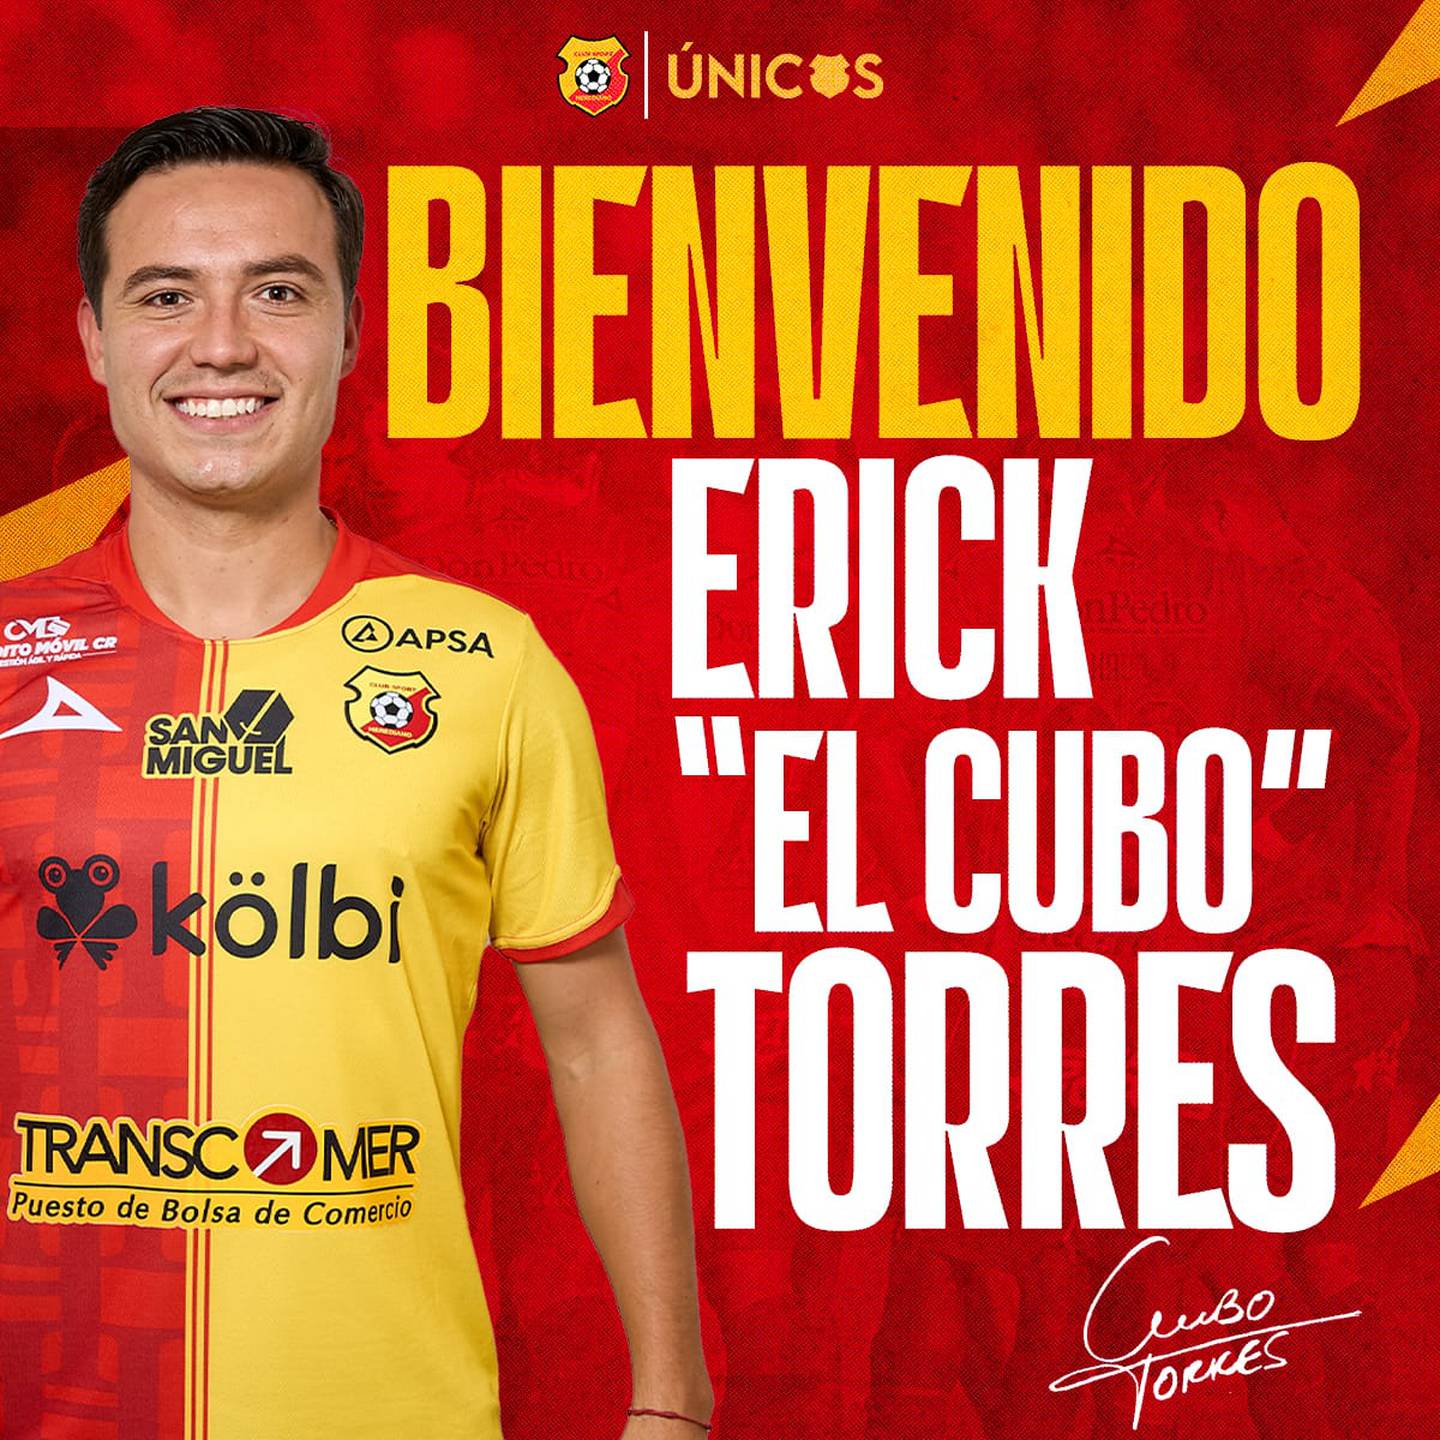 Erick Cubo Torres, Herediano